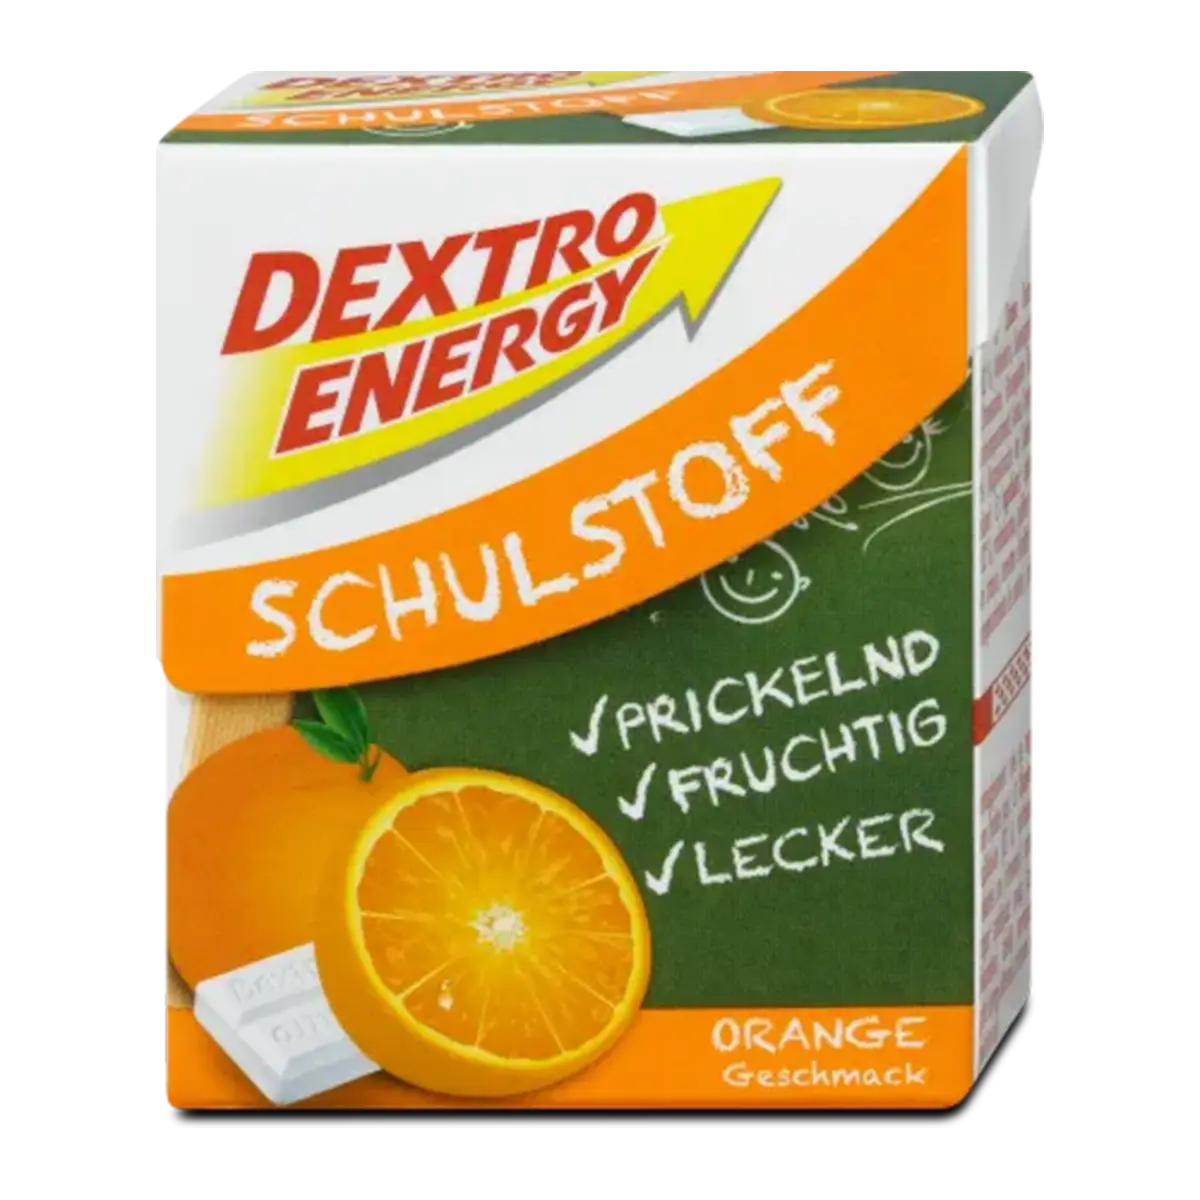 Dextro Energy 'Schulstoff', Orange, 50 g